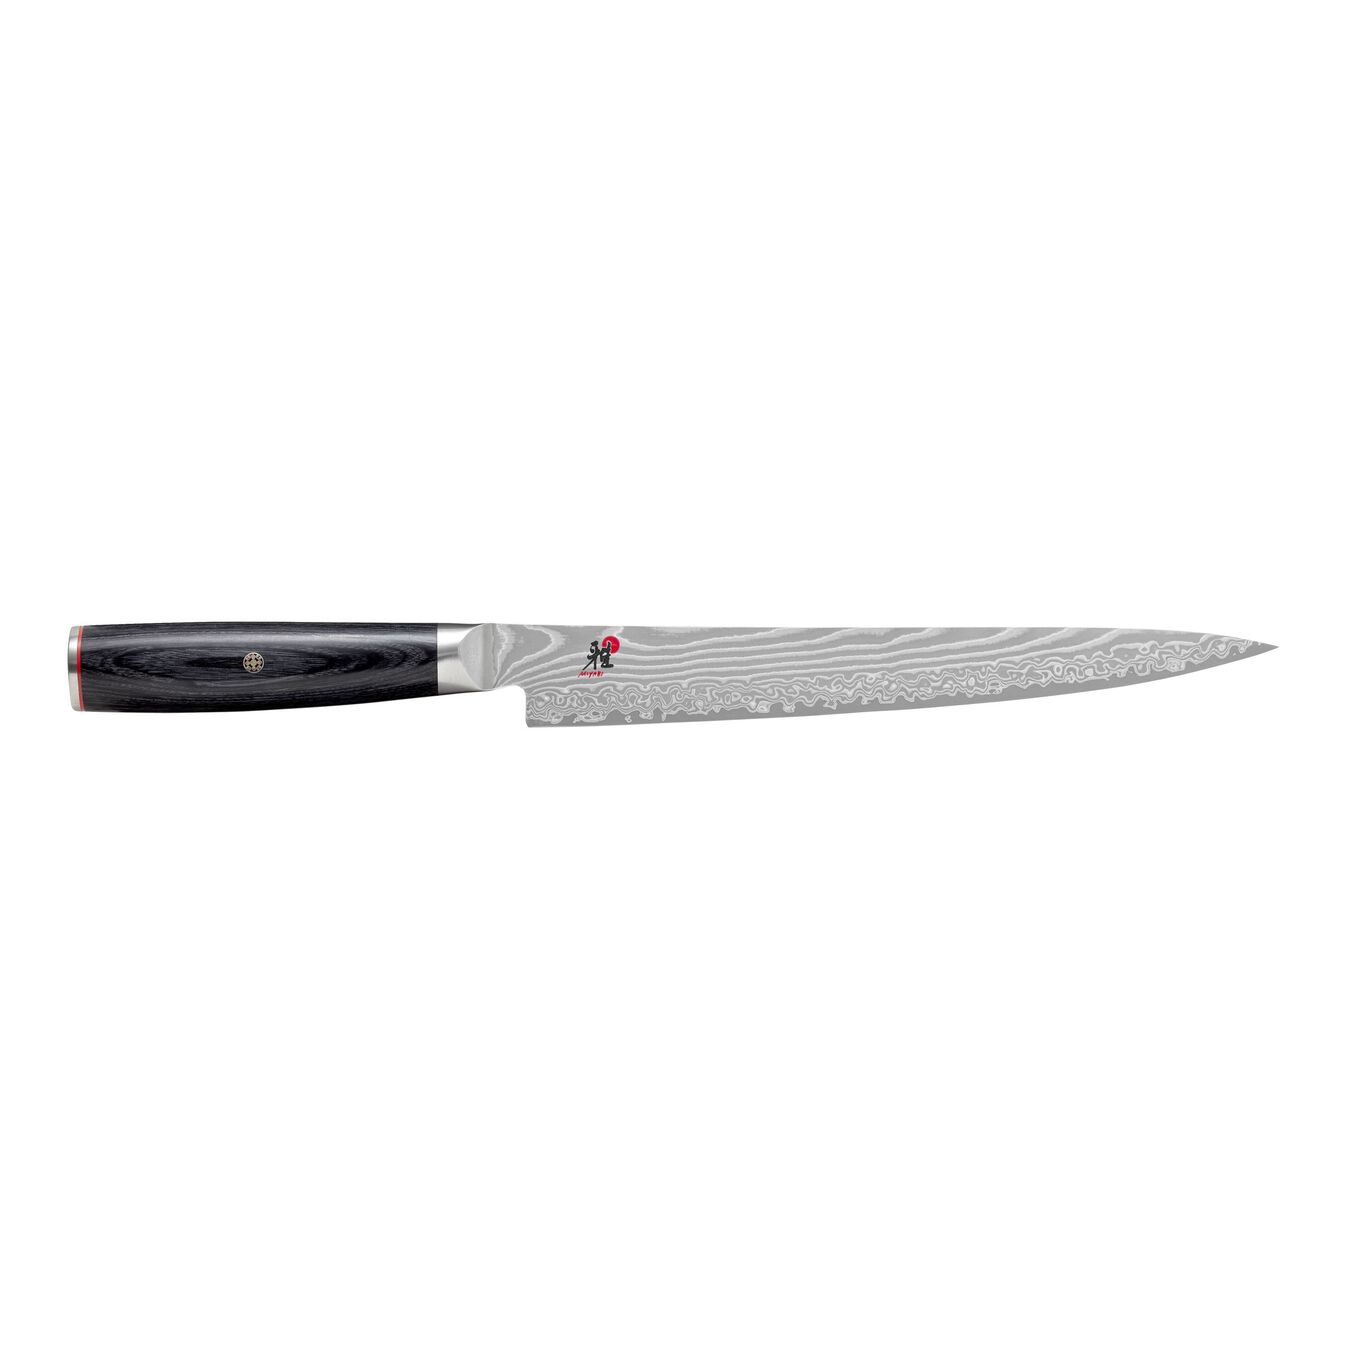 9.5-inch Pakka Wood Slicing/Carving Knife,,large 1